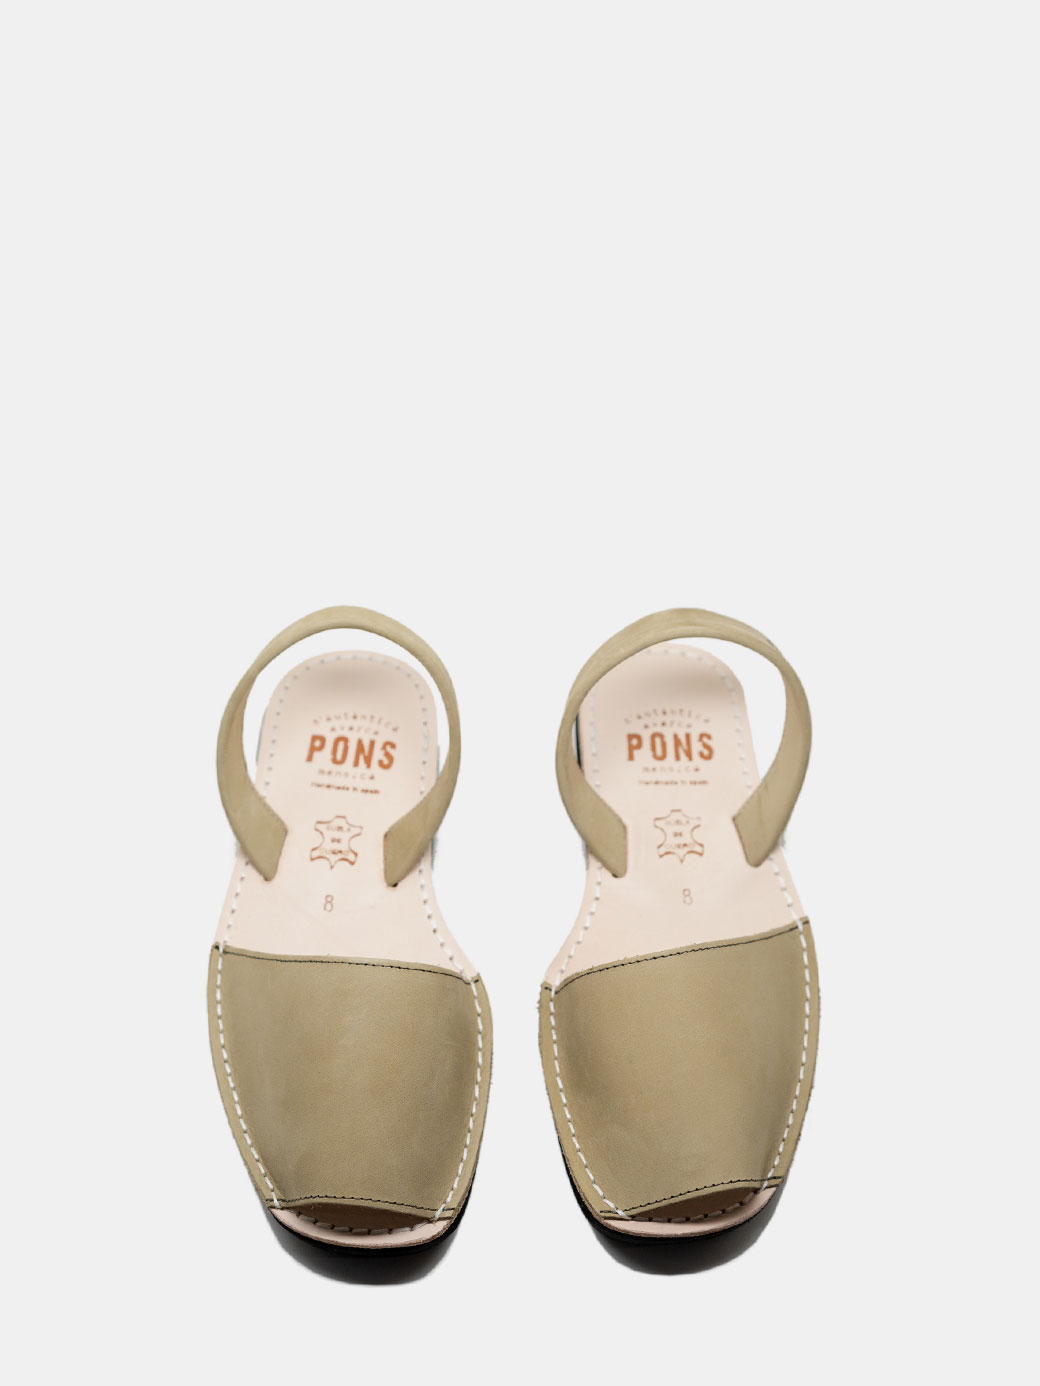 Classic Olive Platform Pons Shoes top